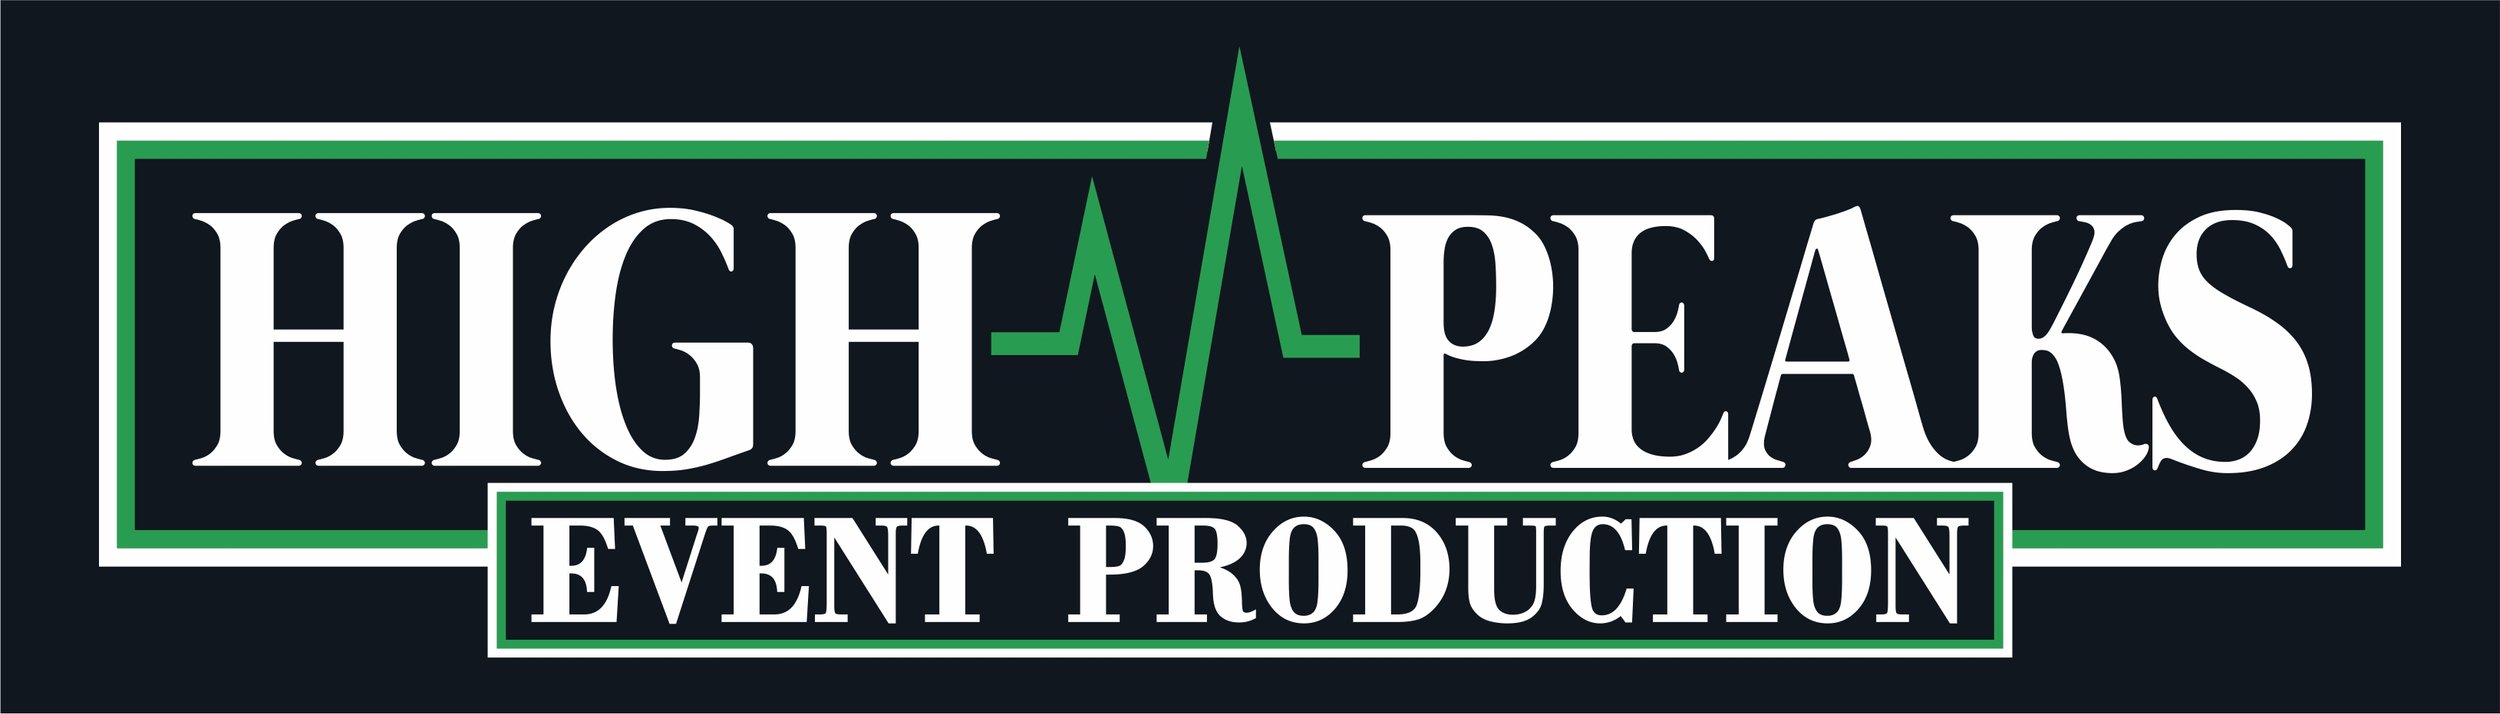 High Peaks Event Production Logo (1).jpg